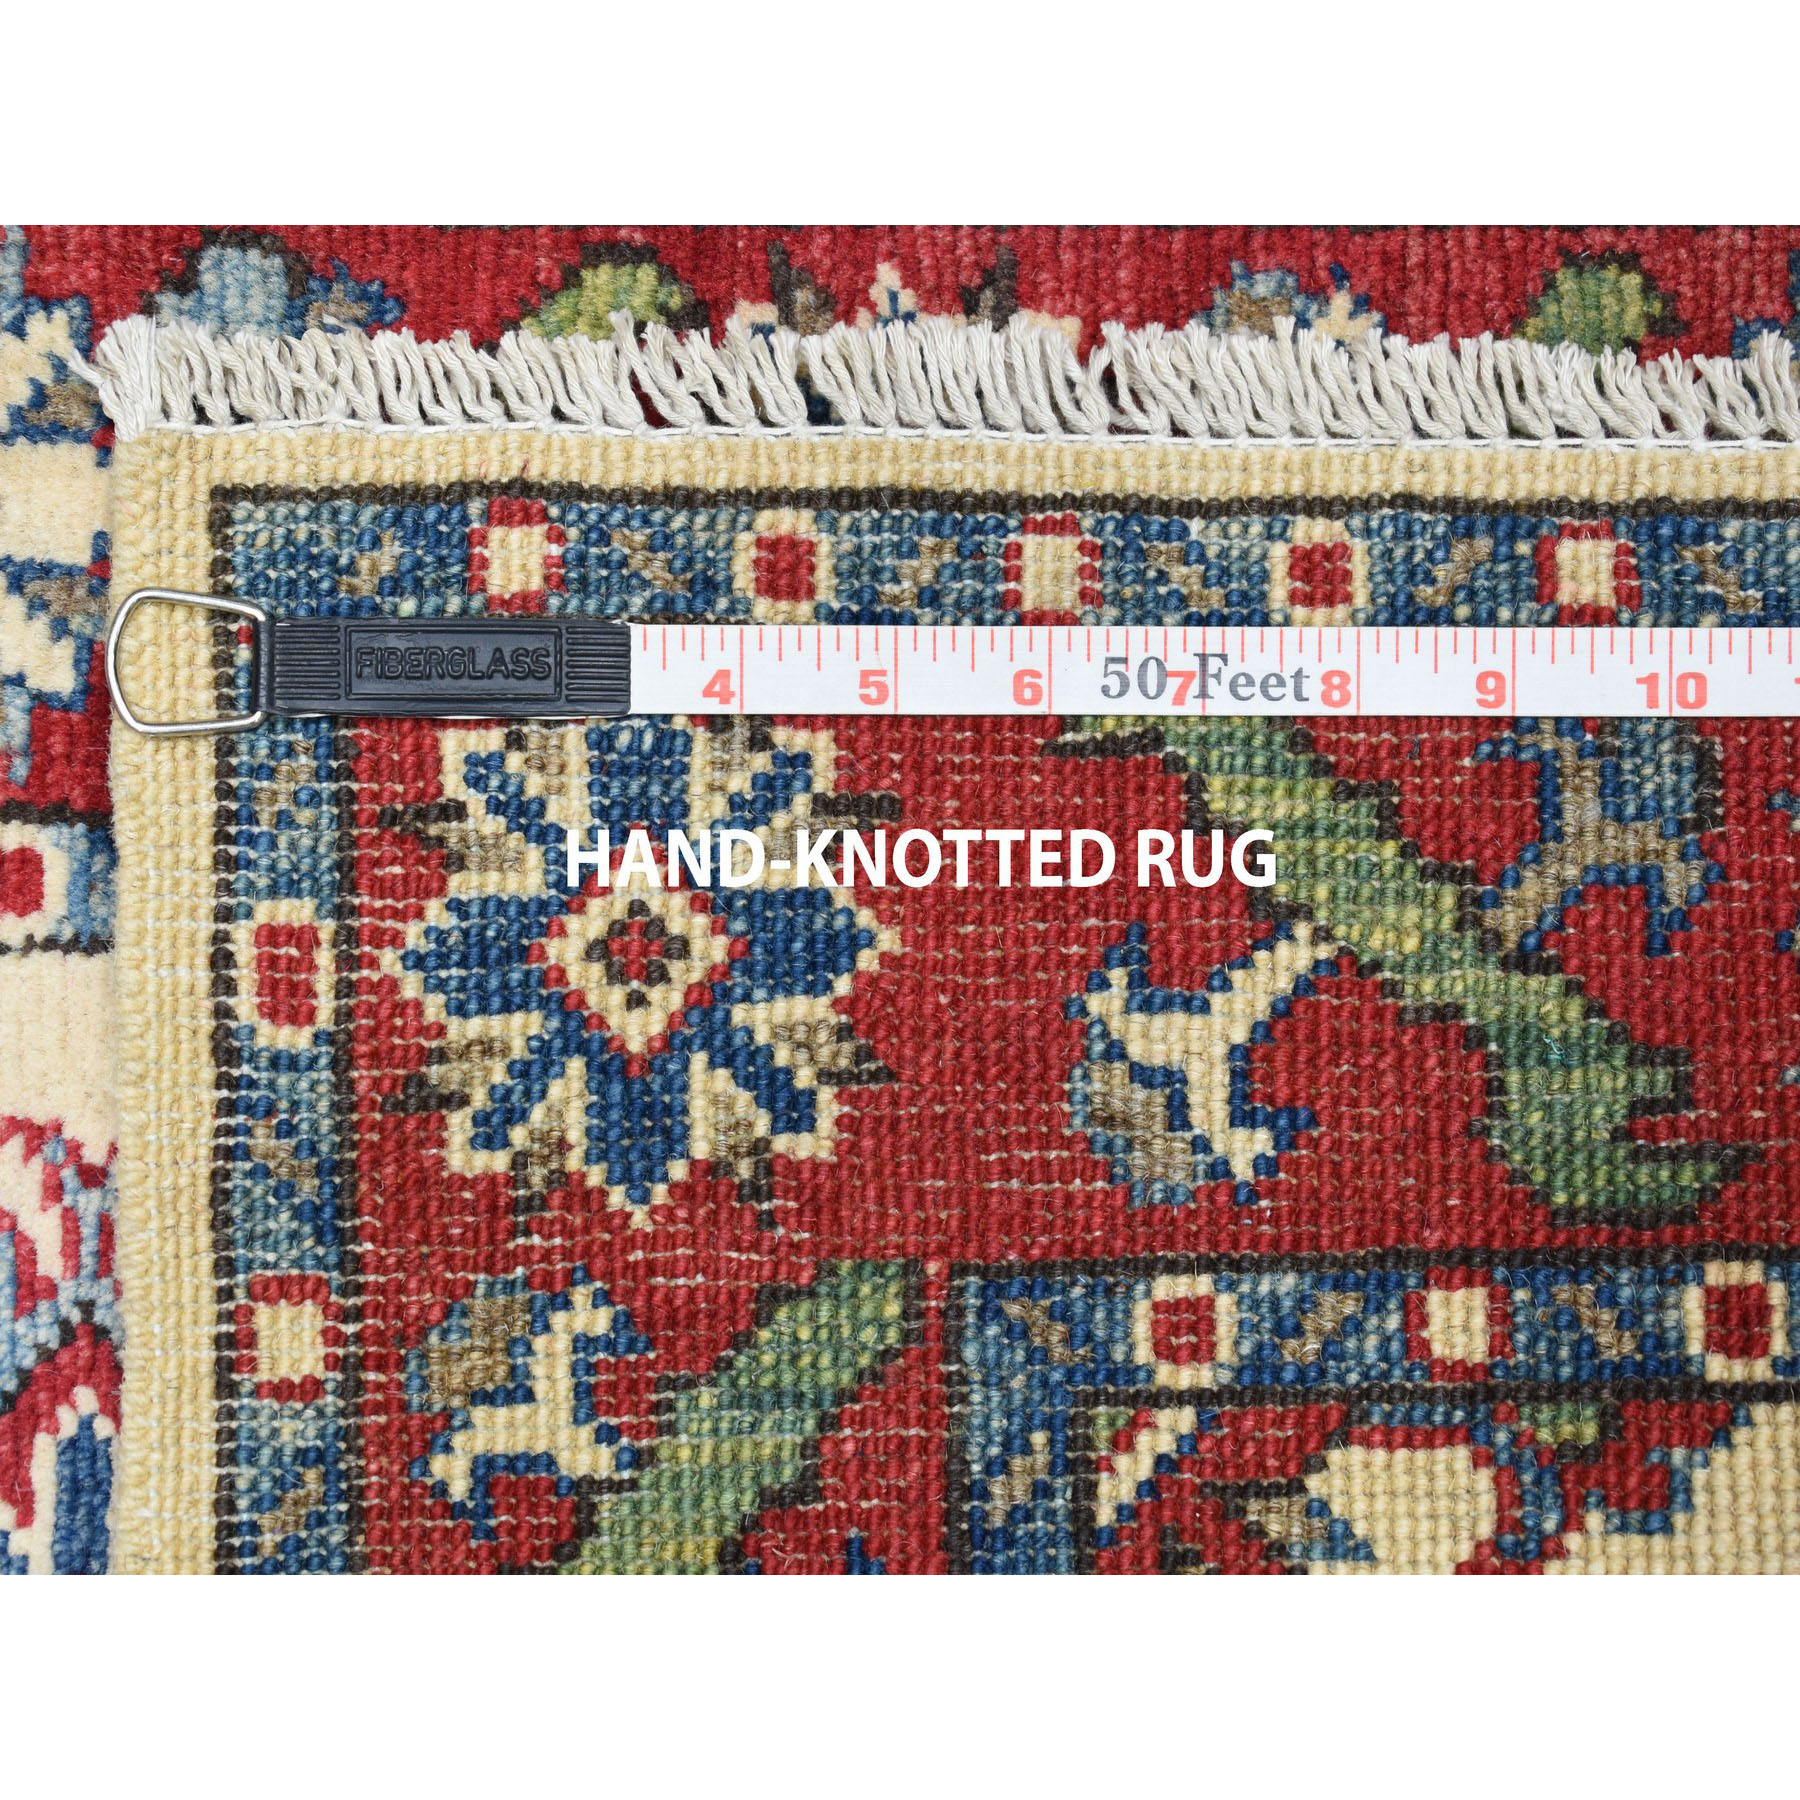 2'x2'9" Ivory Geometric Design Kazak Pure Wool Hand Woven Oriental Rug 